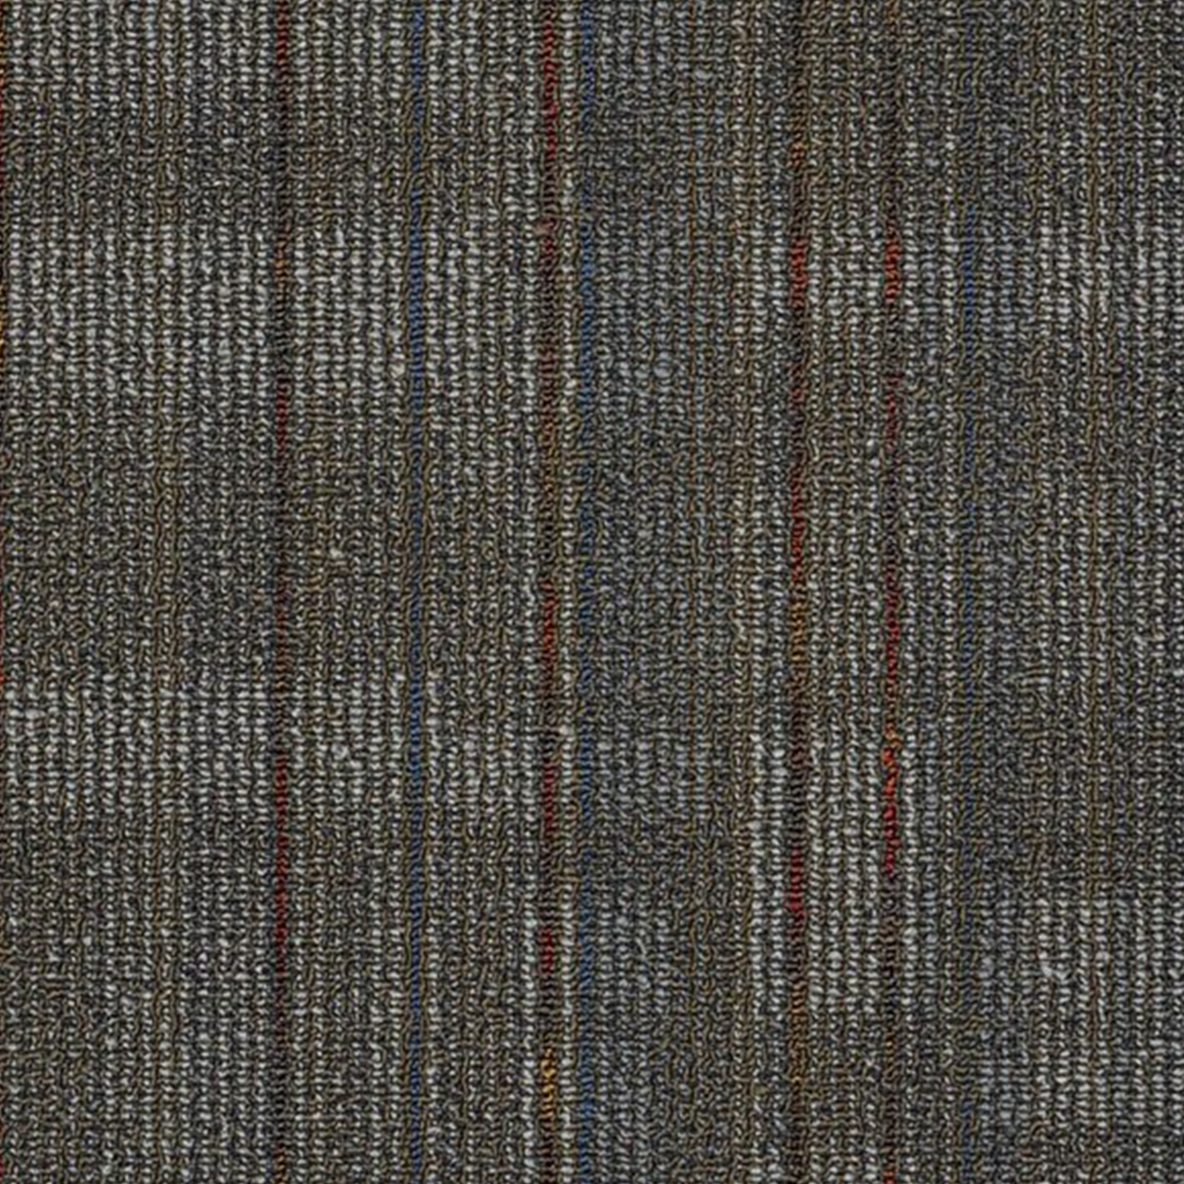 Out of Bounds Commercial Carpet Tile .25 Inch x 2x2 Ft. 13 per Carton Integrate color close up